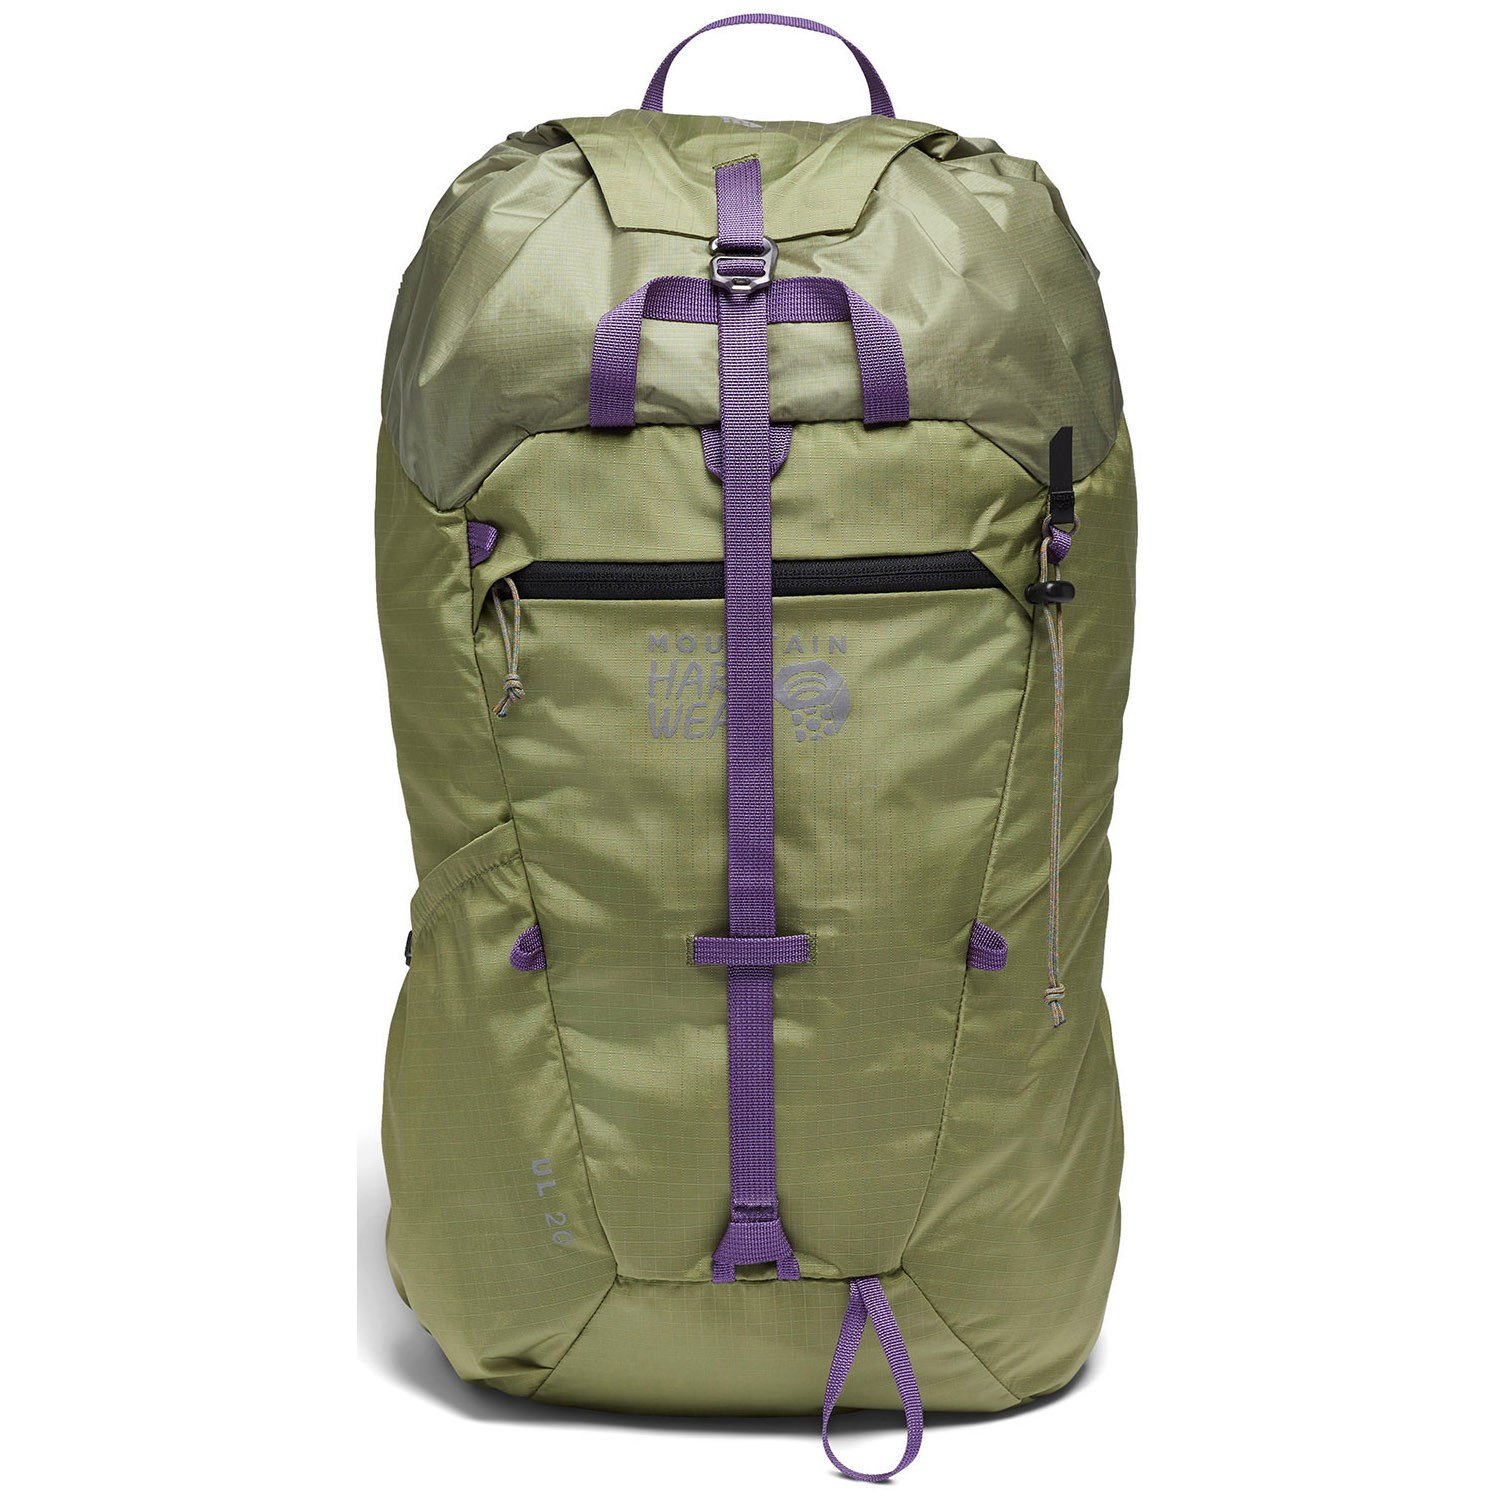 https://images.evo.com/imgp/zoom/210605/984437/mountain-hardwear-ul-20-backpack-.jpg